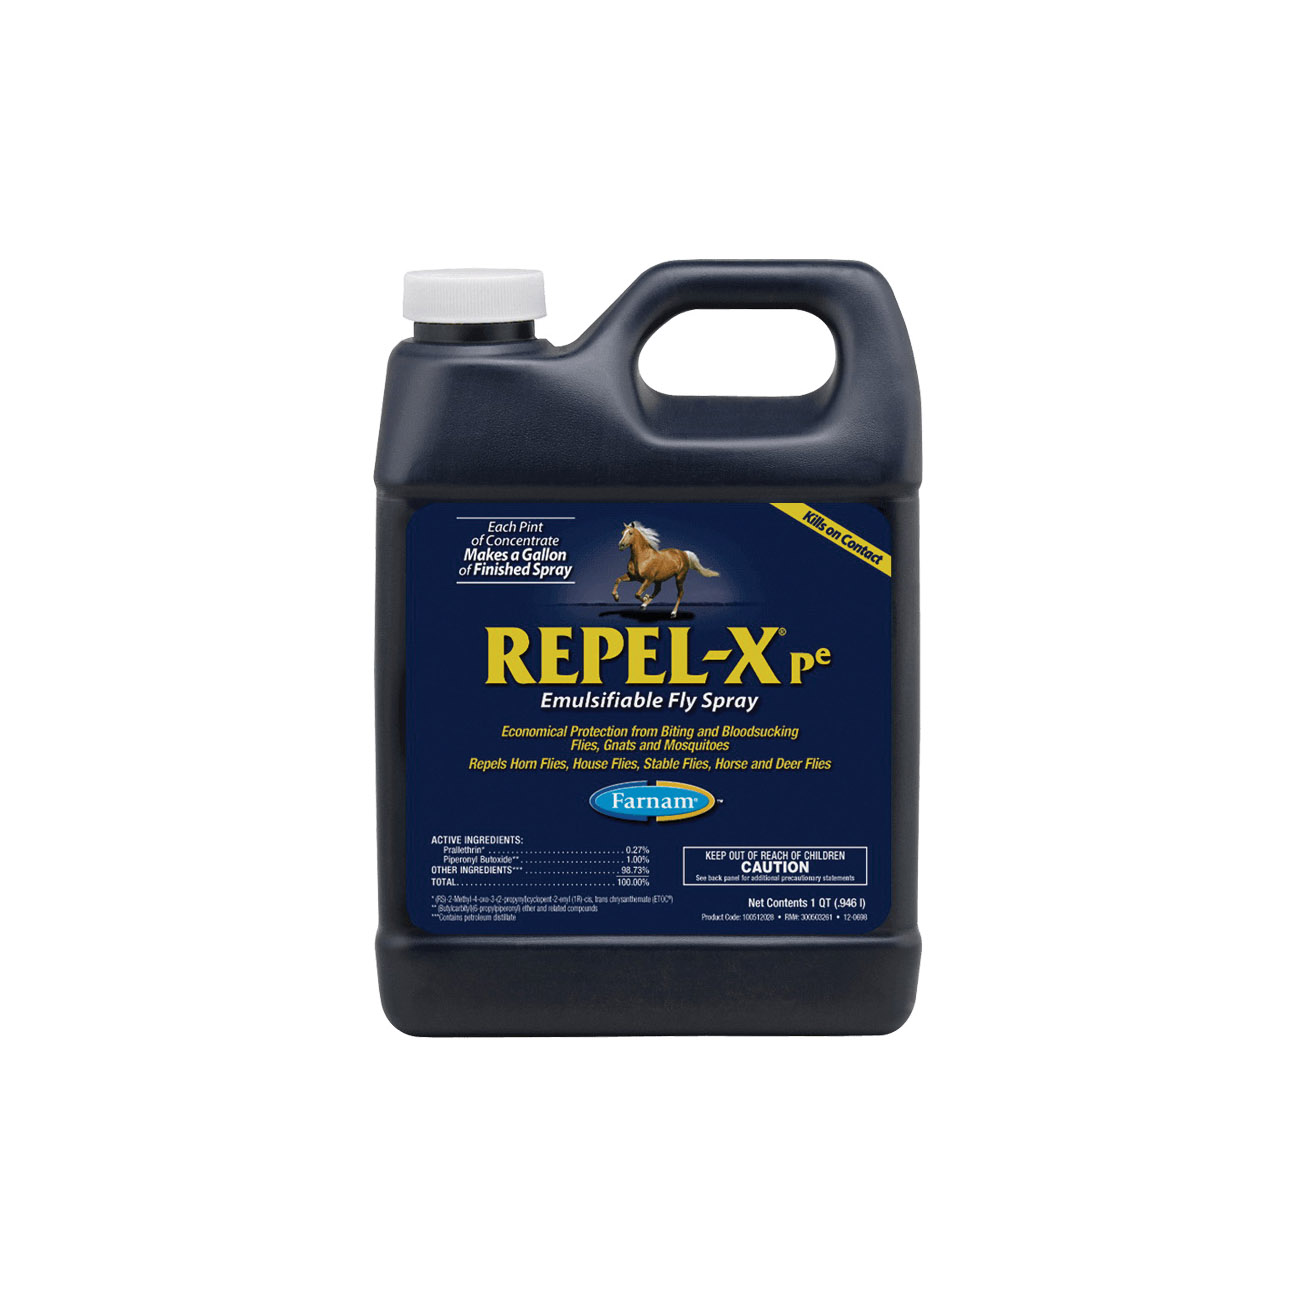 Repel-X 100512028 Emulsifiable Fly Spray, 32 oz Bottle